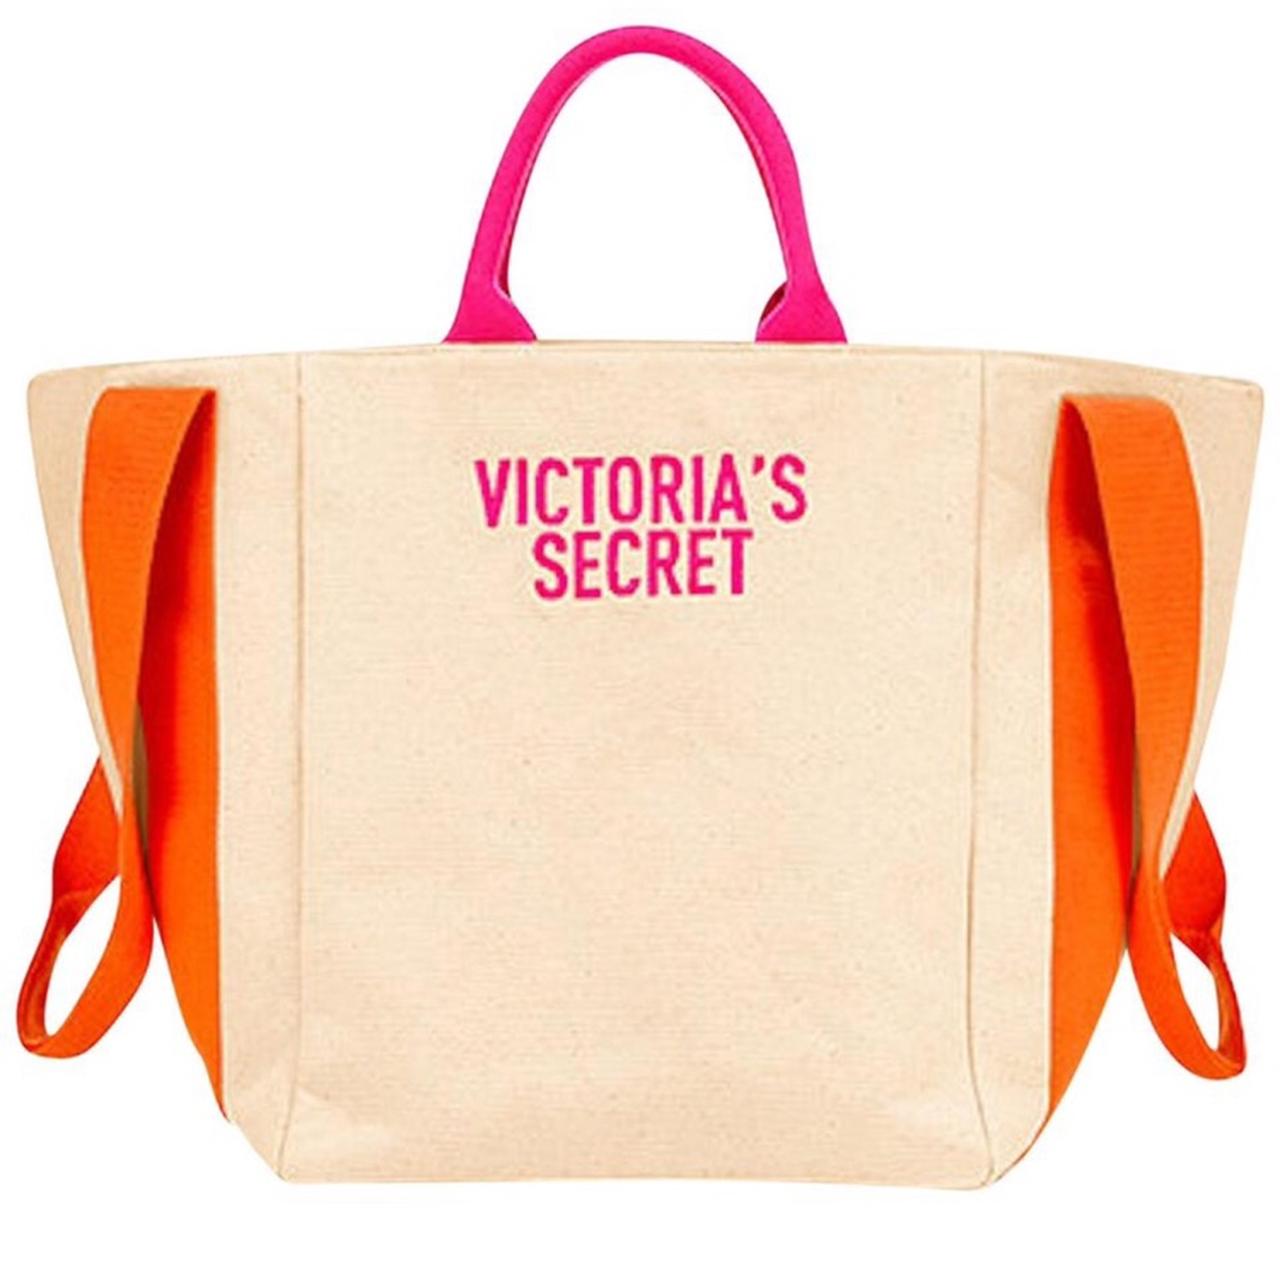 Victoria's Secret Tote bag Black w/ white writing - Depop